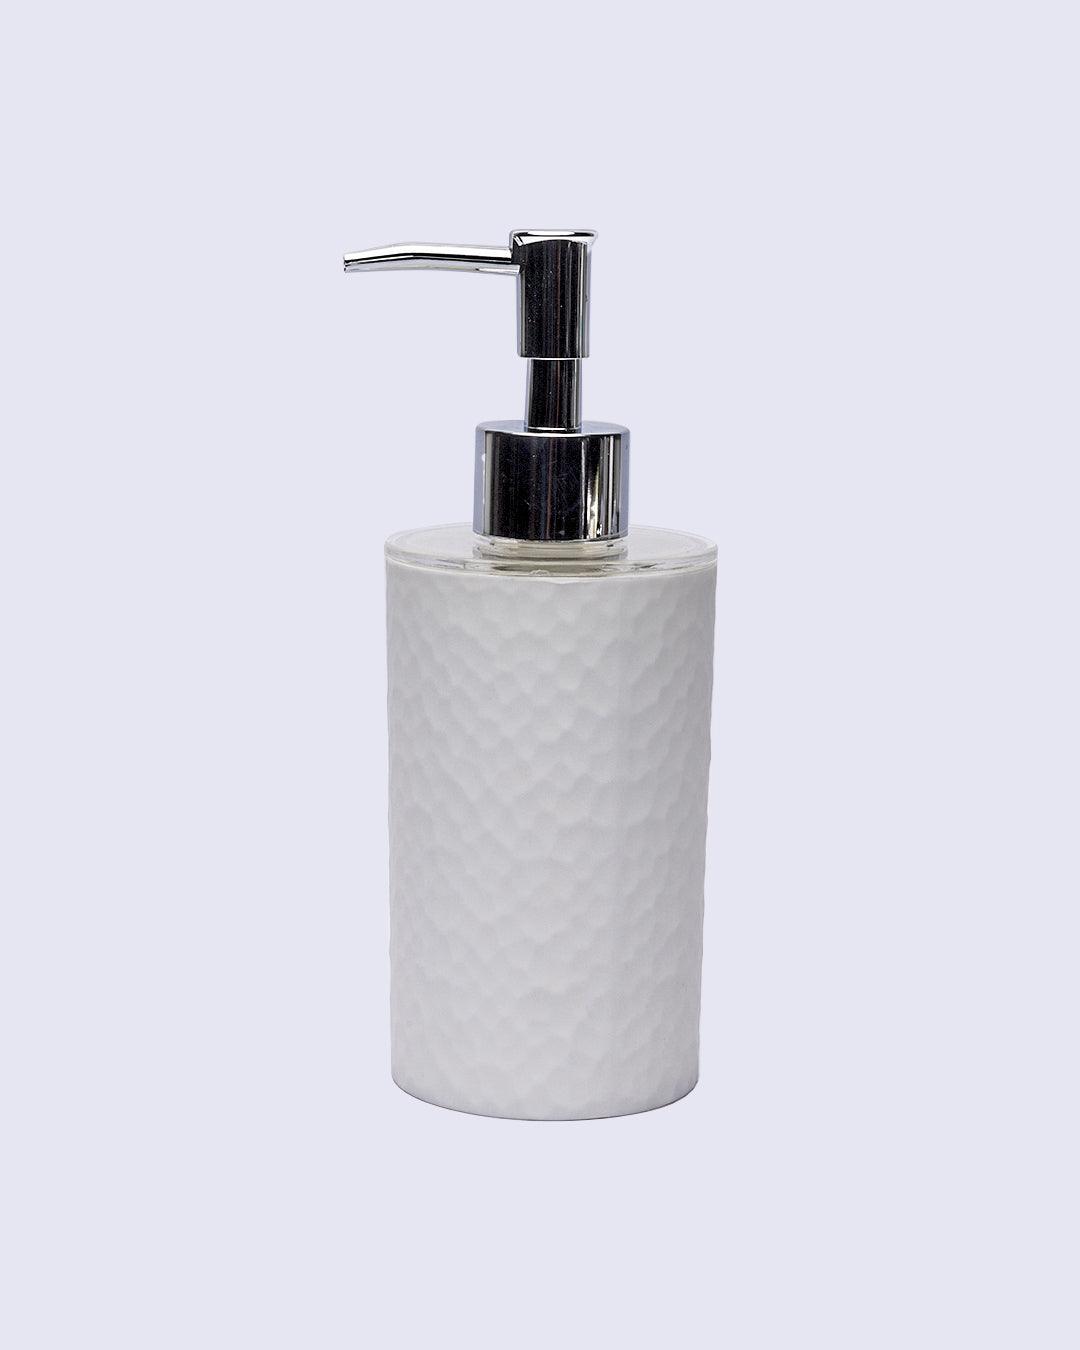 Soap Dispenser, White, Plastic, 390 mL - MARKET 99